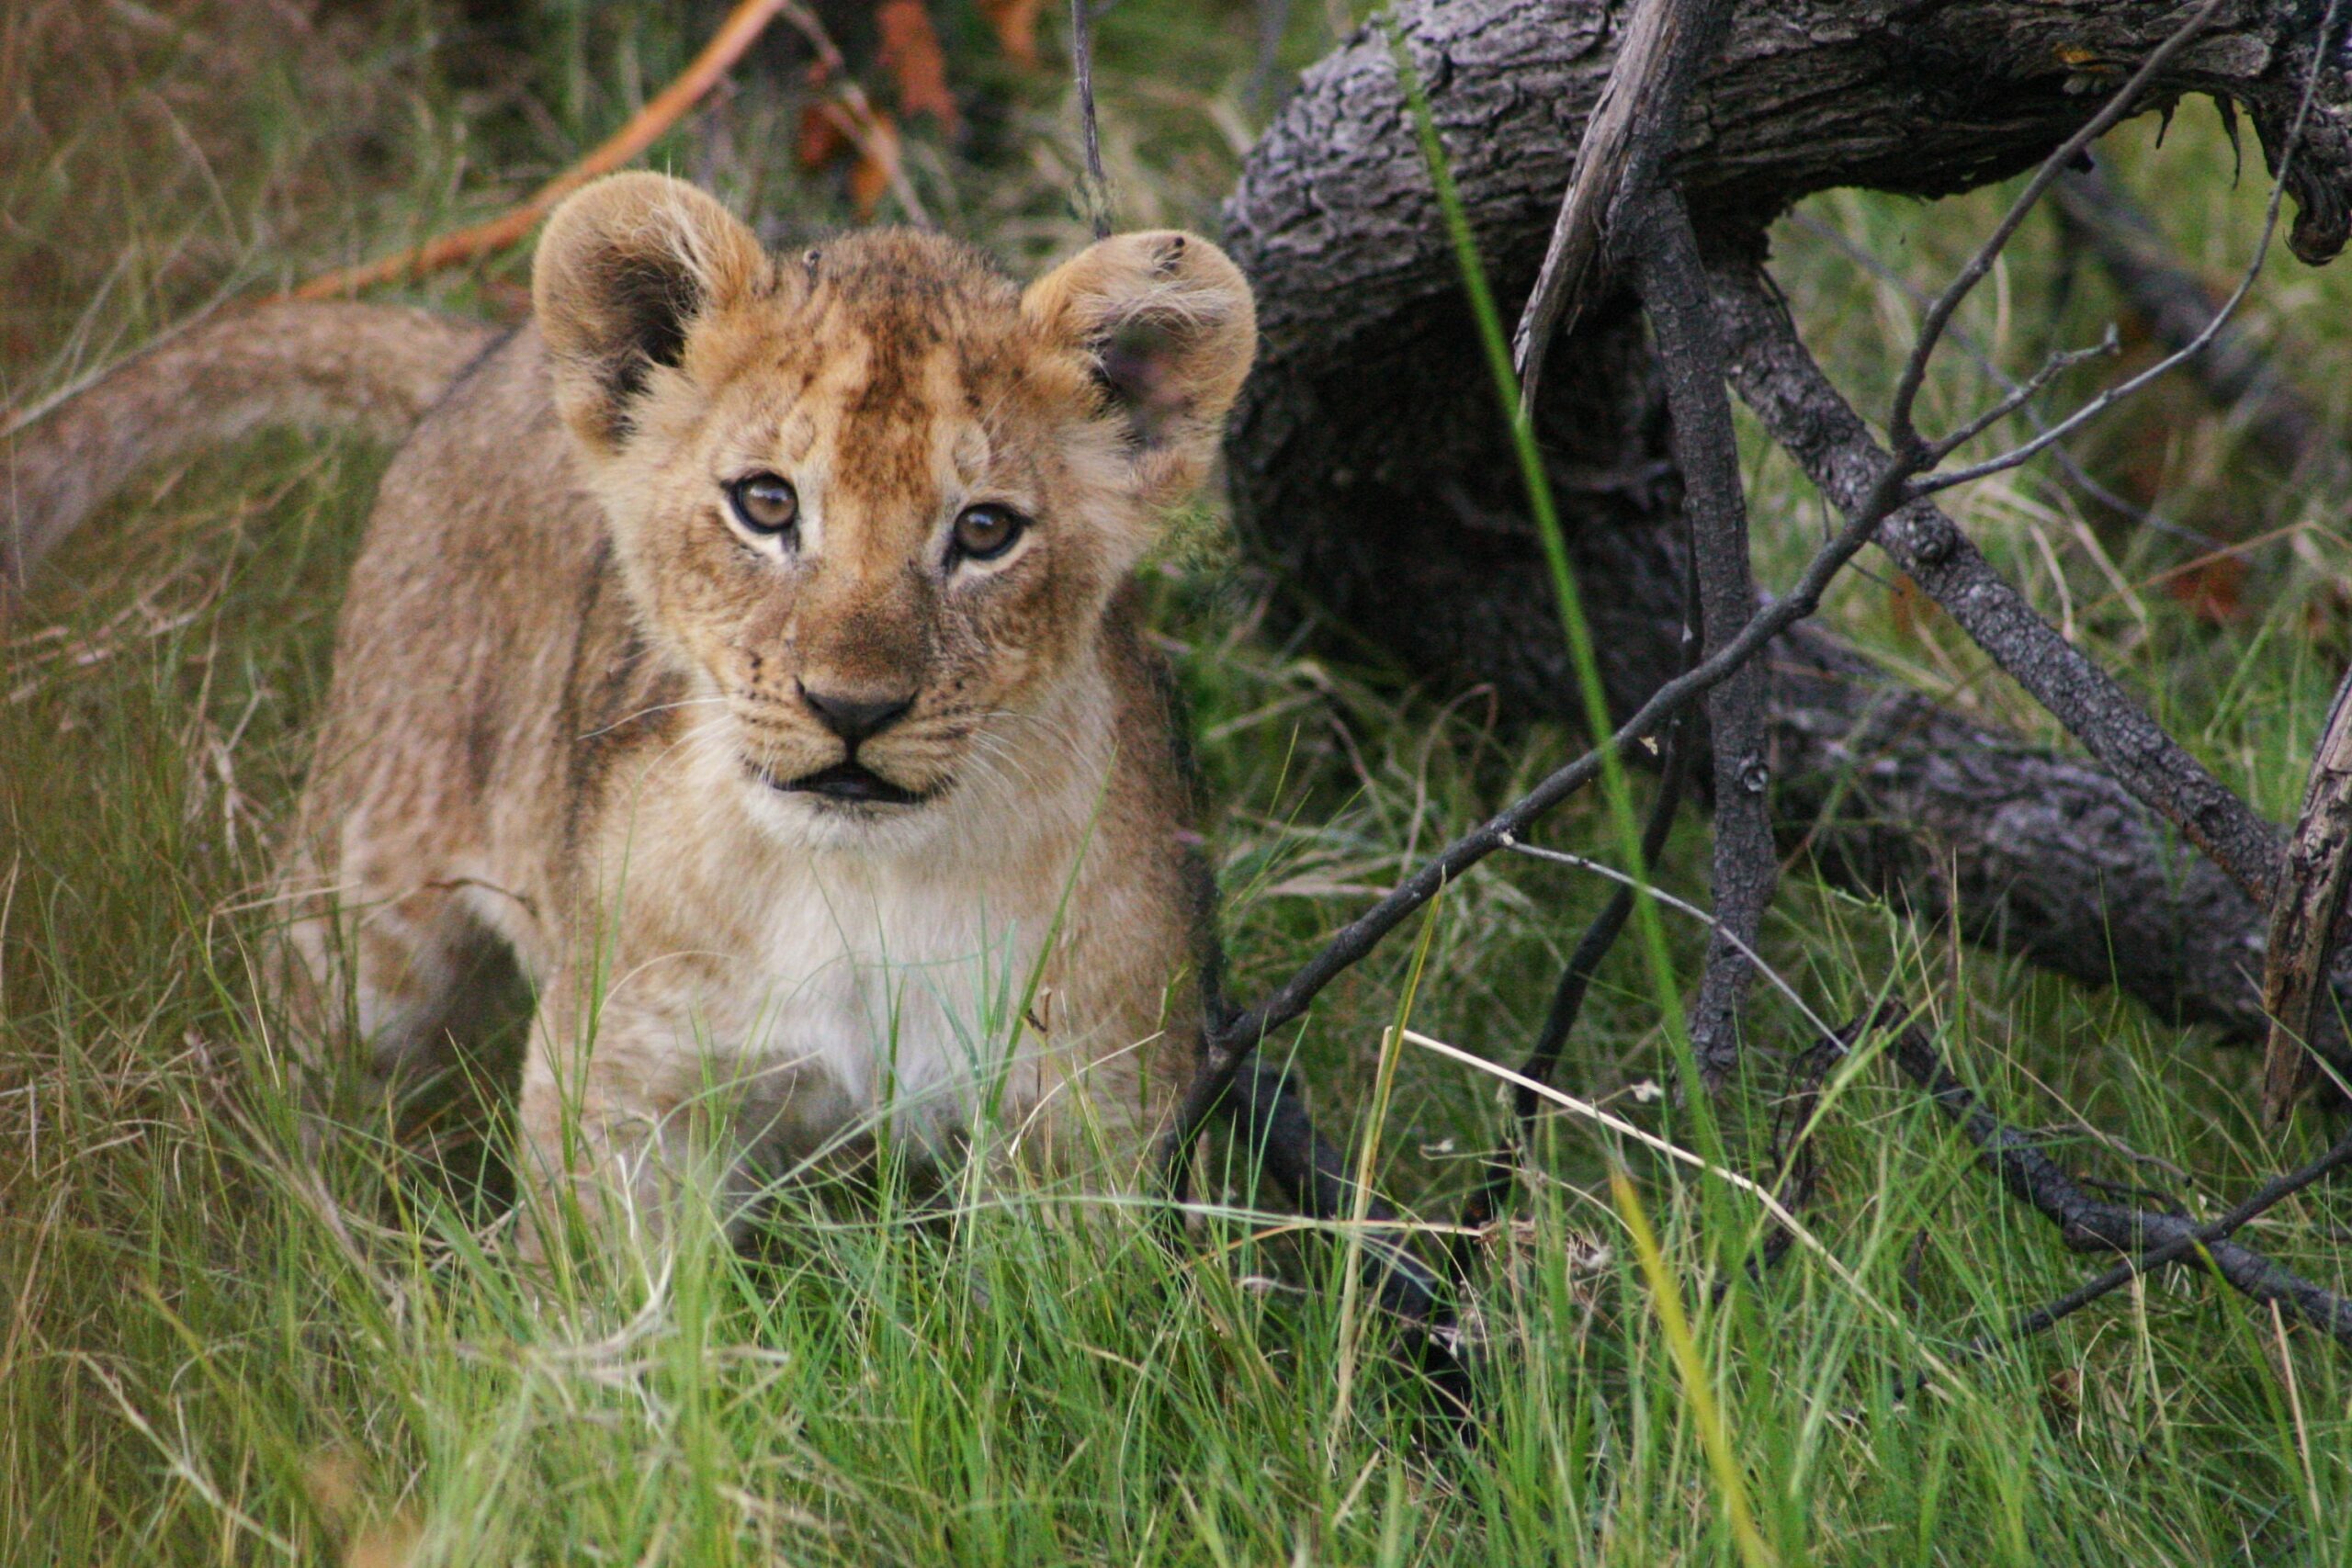 Choosing responsible wildlife encounters on safari, Lion Cub